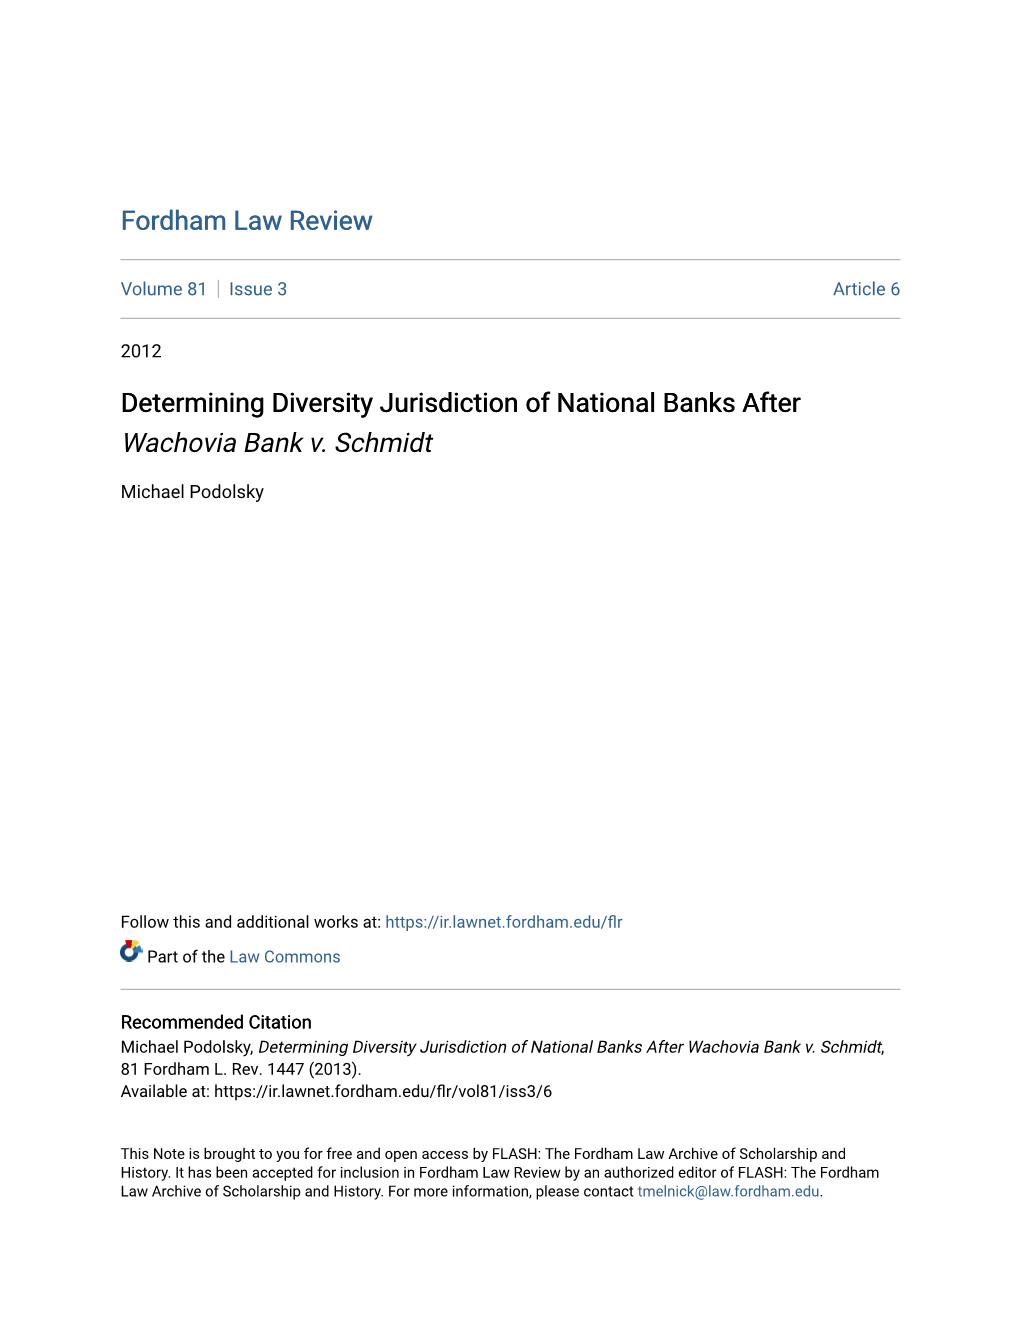 Determining Diversity Jurisdiction of National Banks After Wachovia Bank V